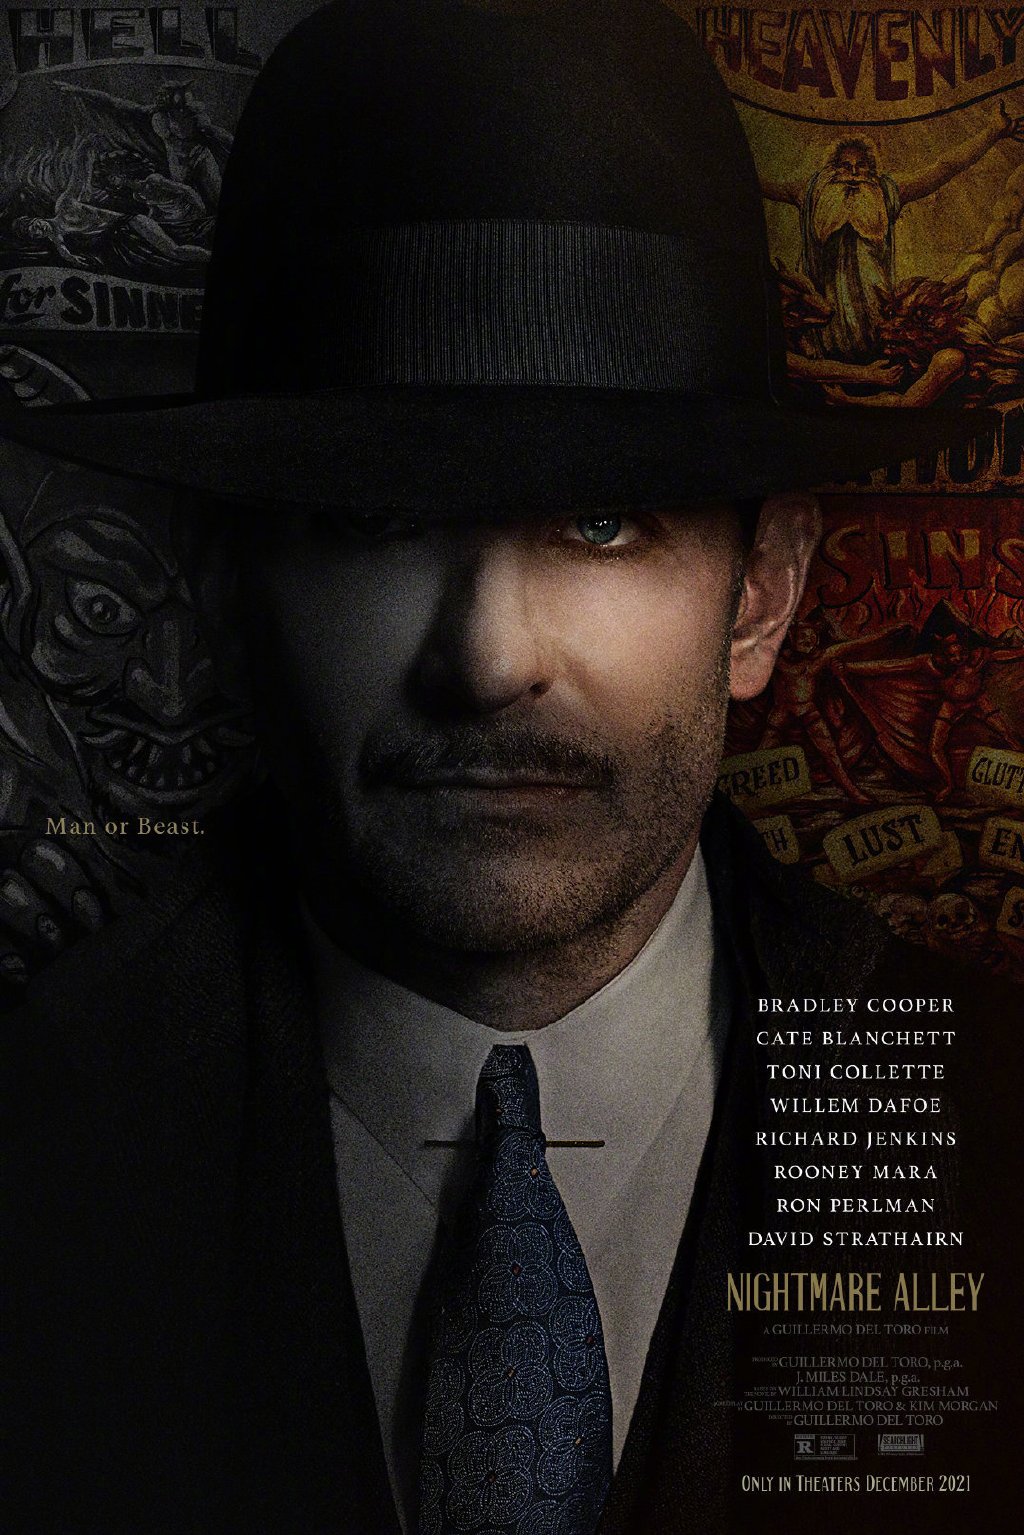 Bradley Cooper's new film "Nightmare Alley" reveals new poster